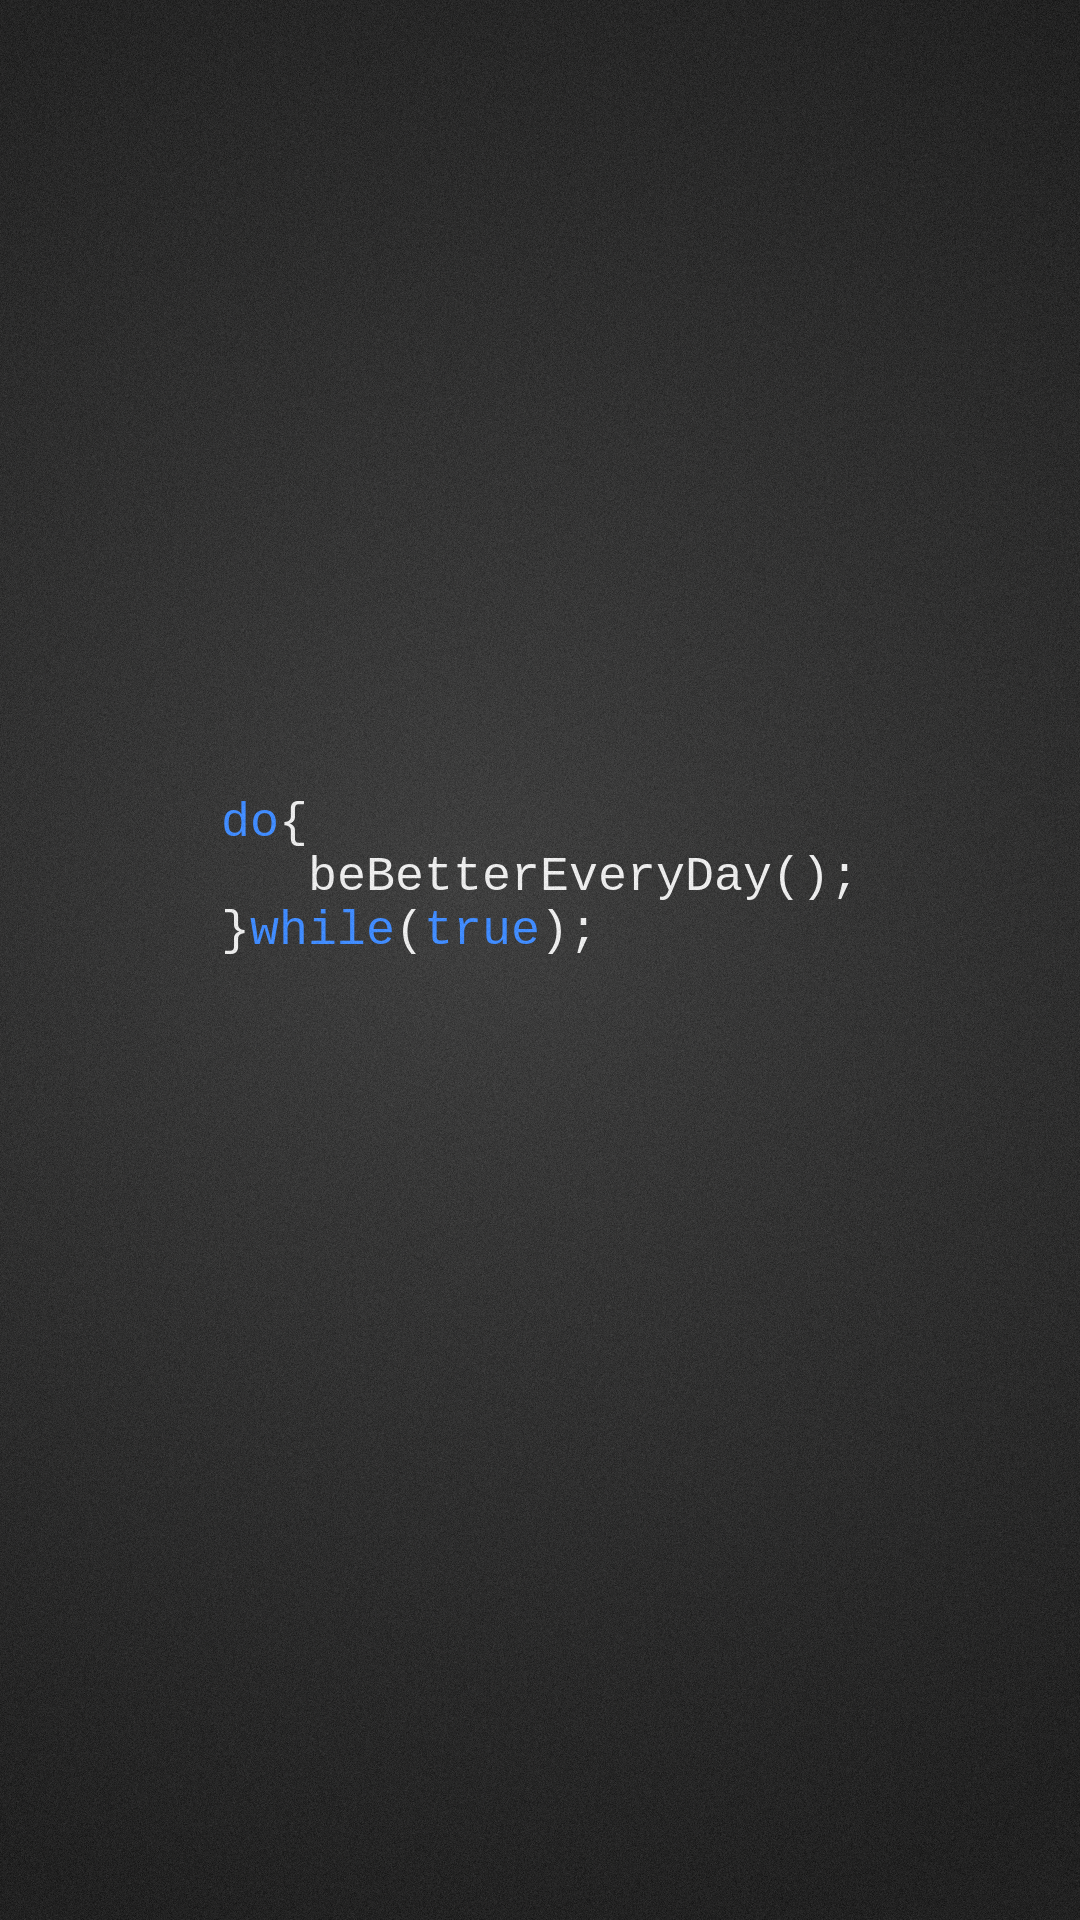 Code programming wallpaper smartphone